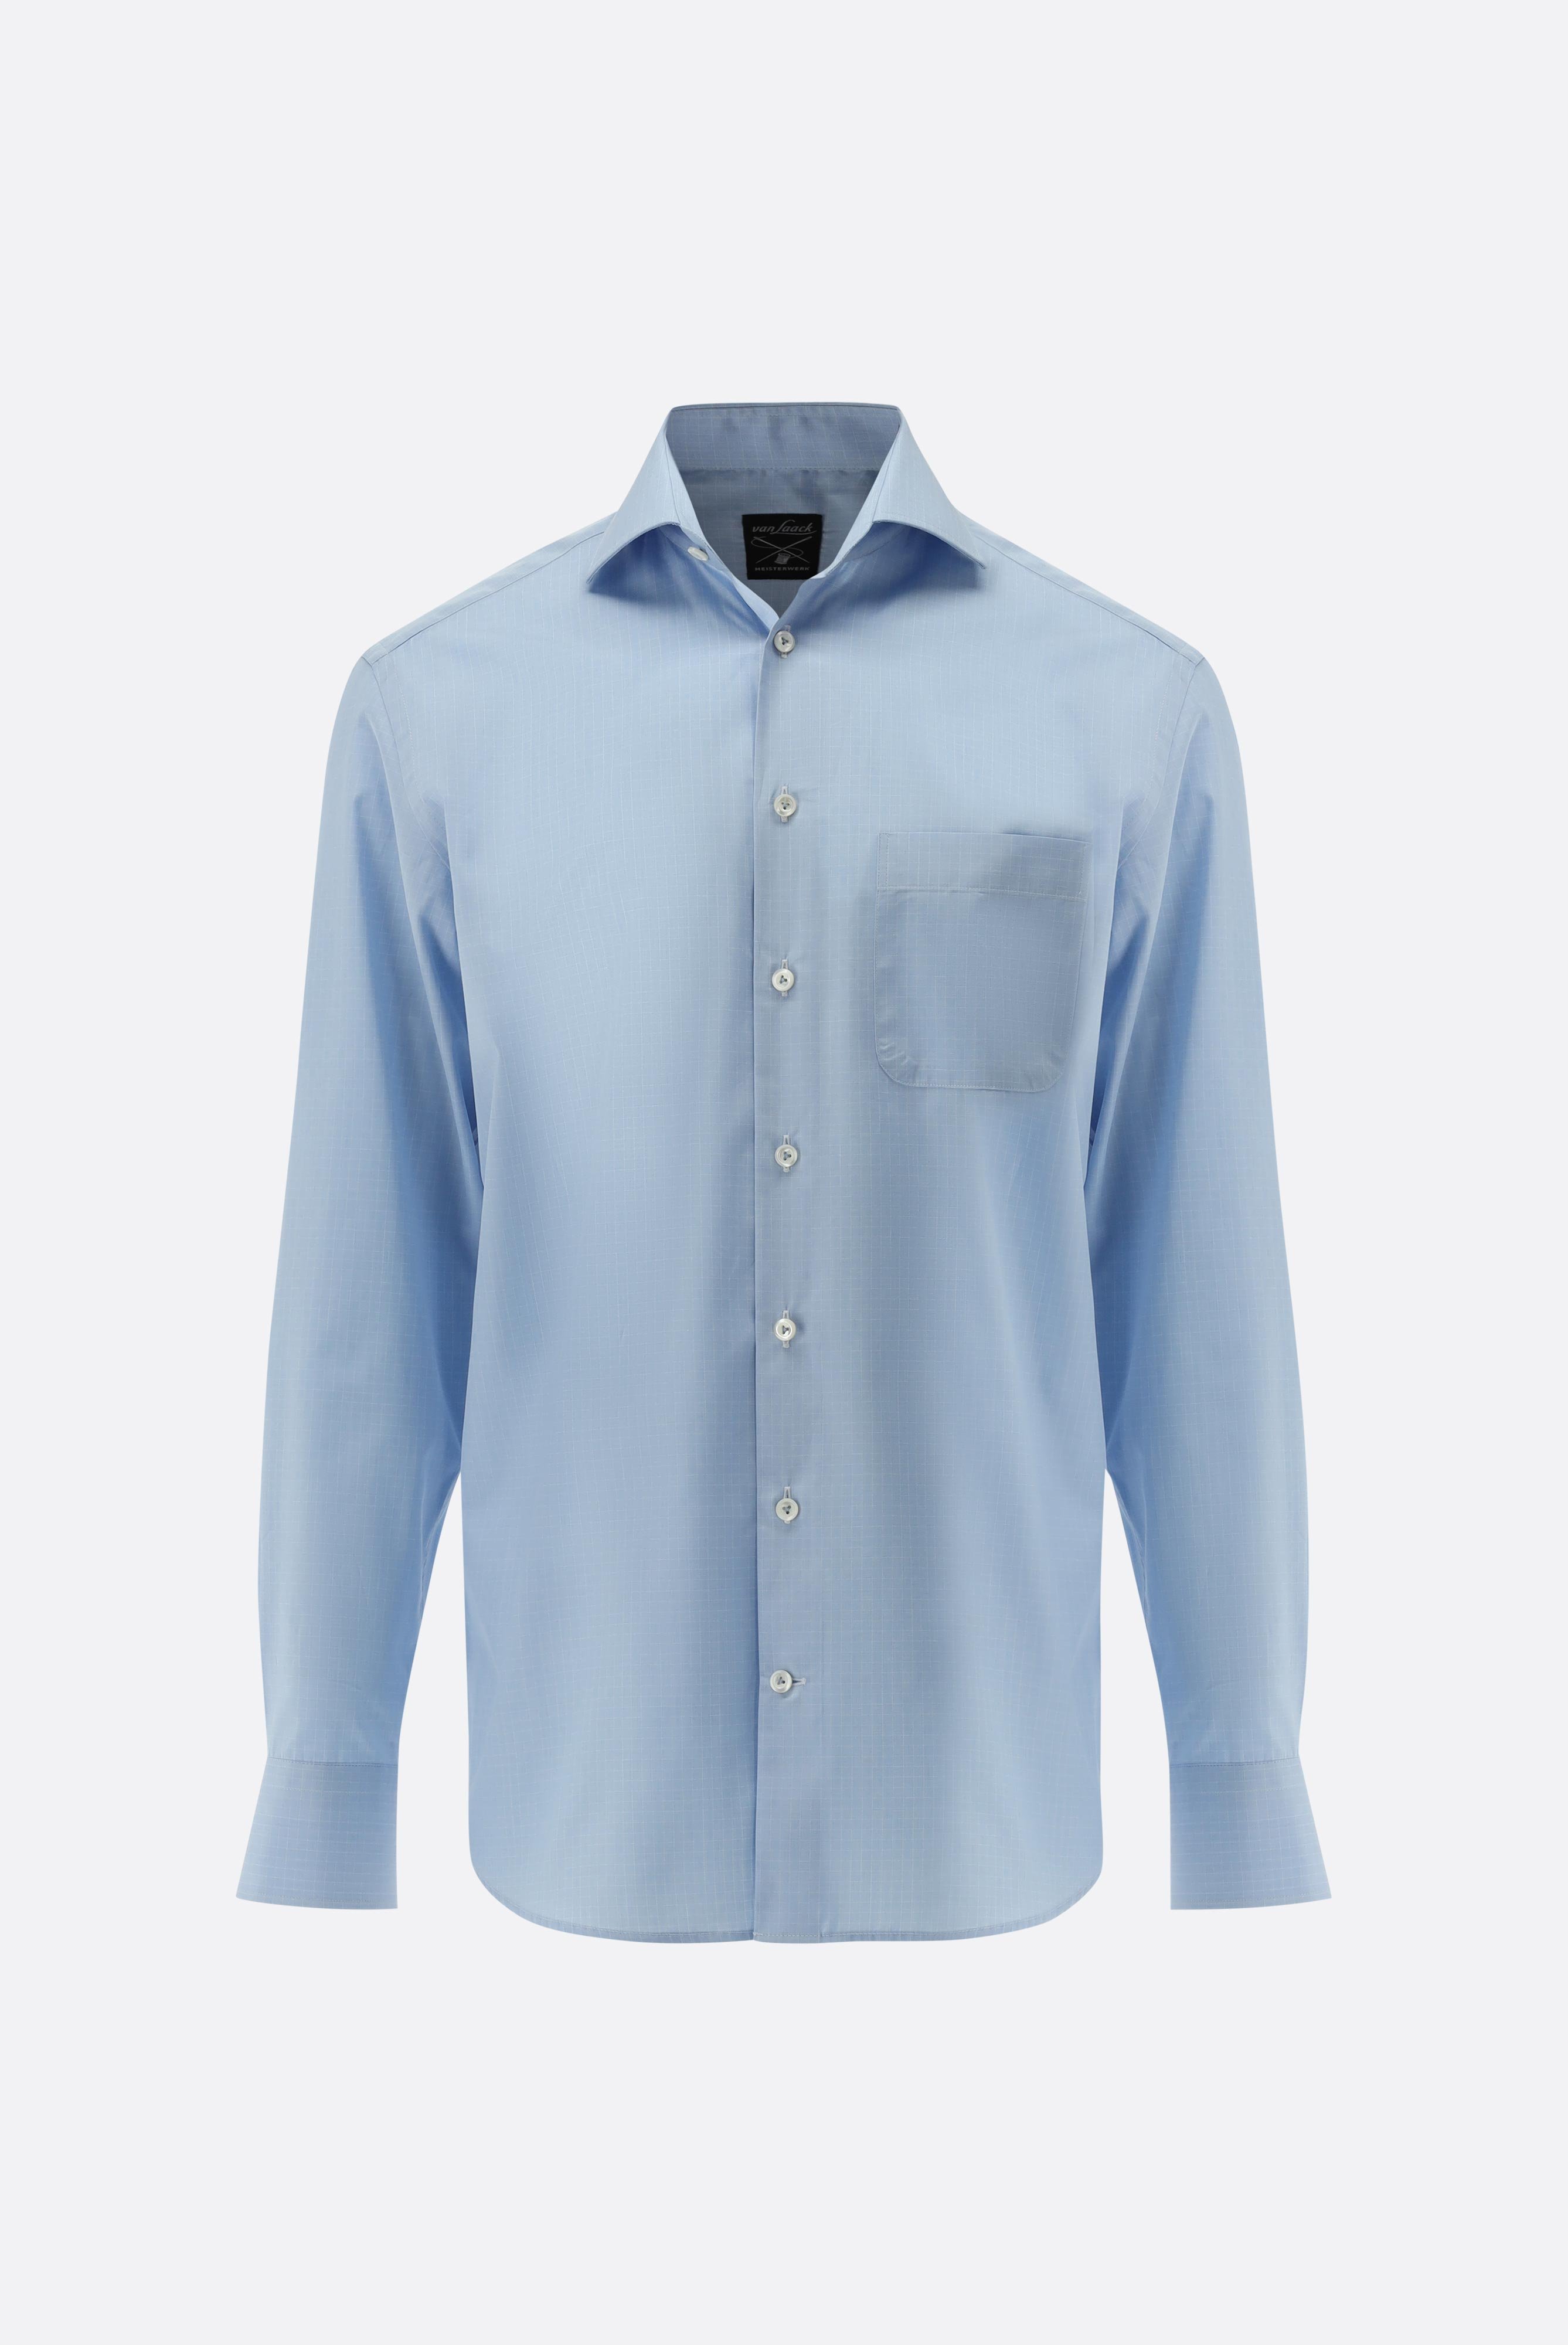 Comfort-Fit shirts+Dobby Business Shirt Comfort Fit+20.2021.AV.162031.730.39